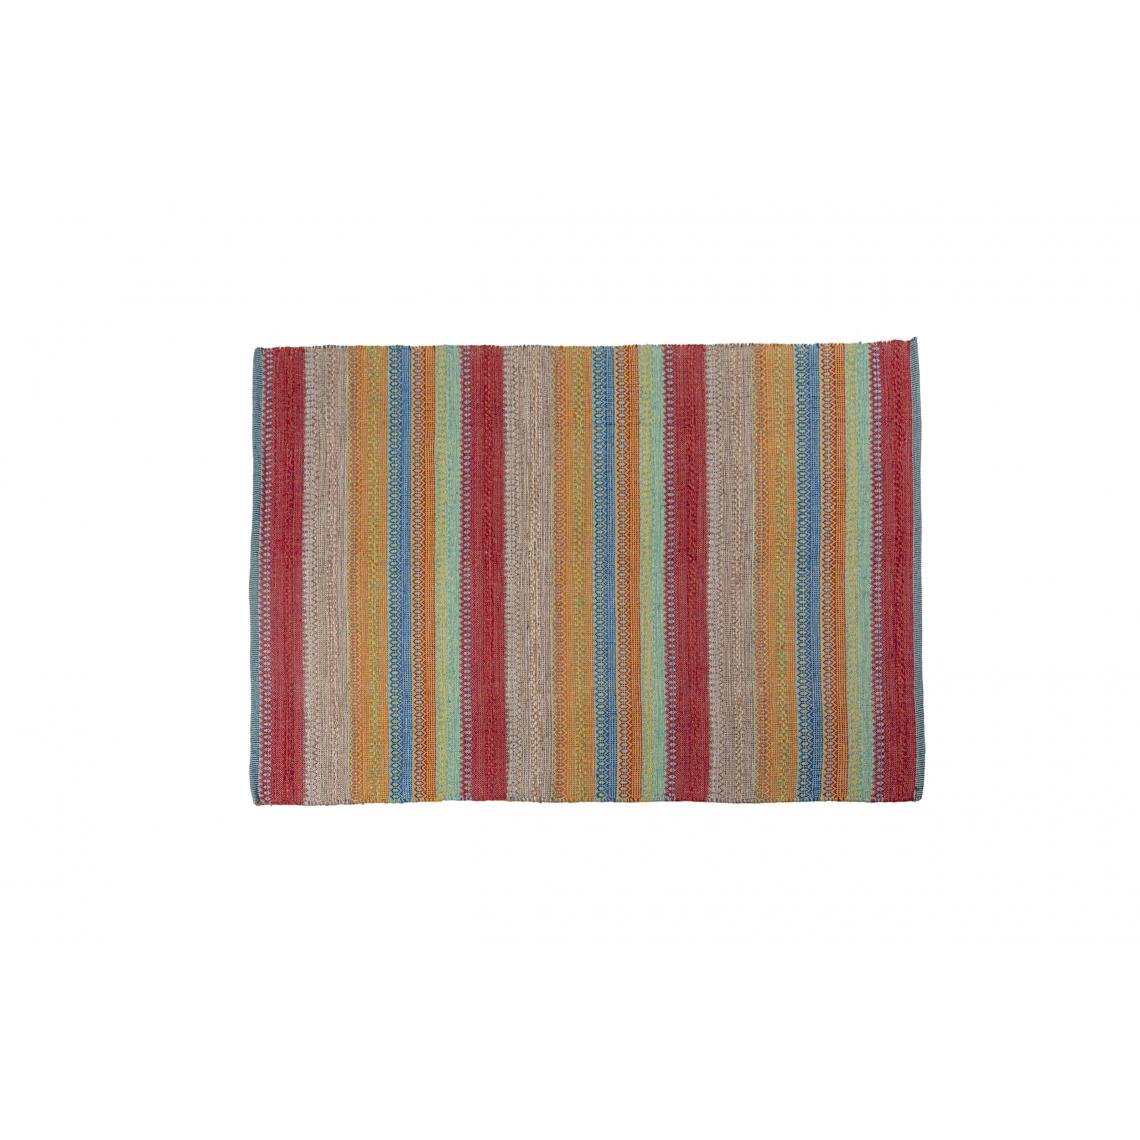 Alter - Tapis moderne Cleveland, style kilim, 100% coton, multicolore, 150x80cm - Tapis